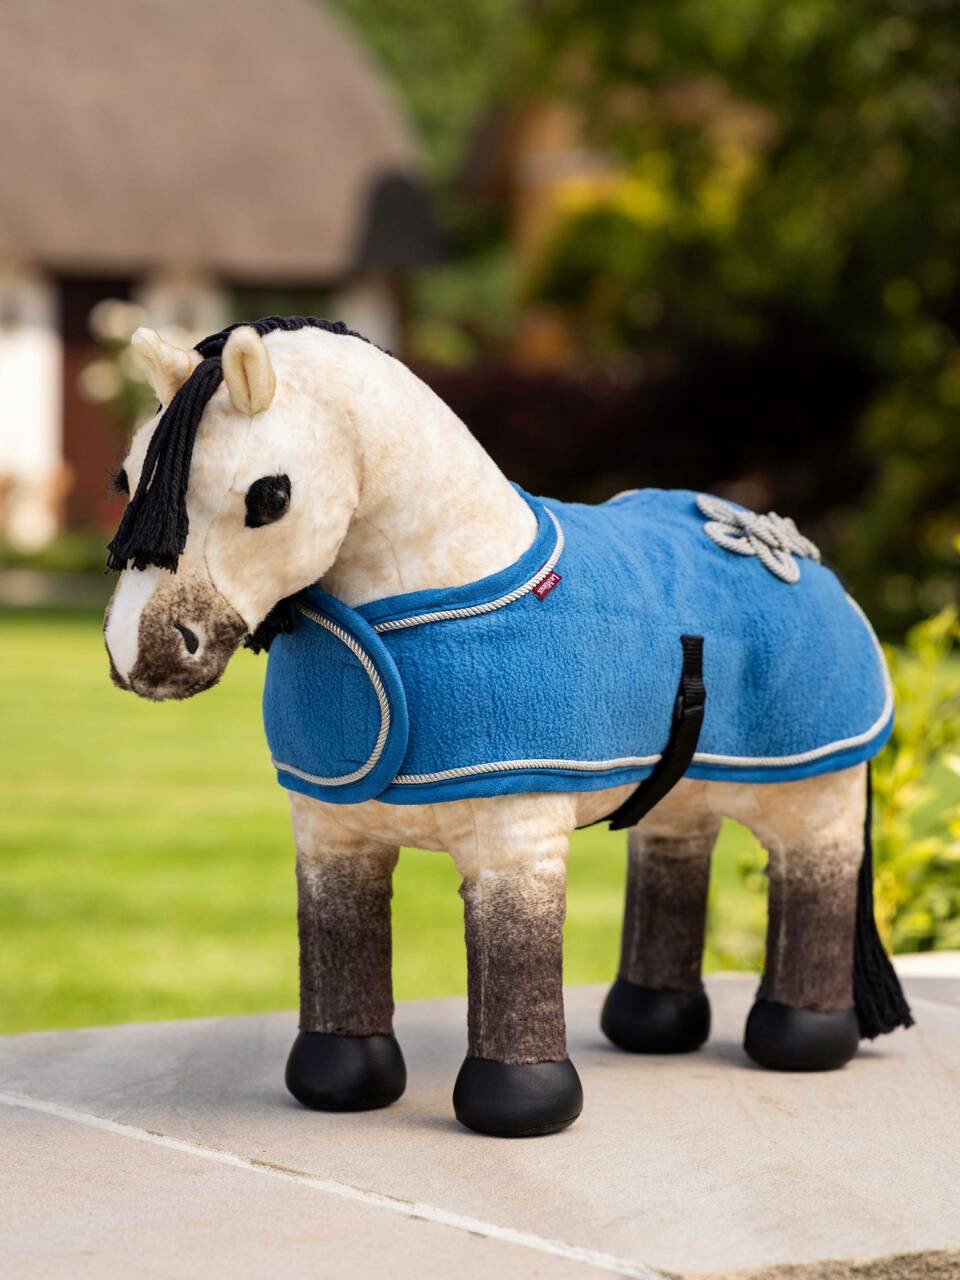 LeMieux Toy Pony Blanket